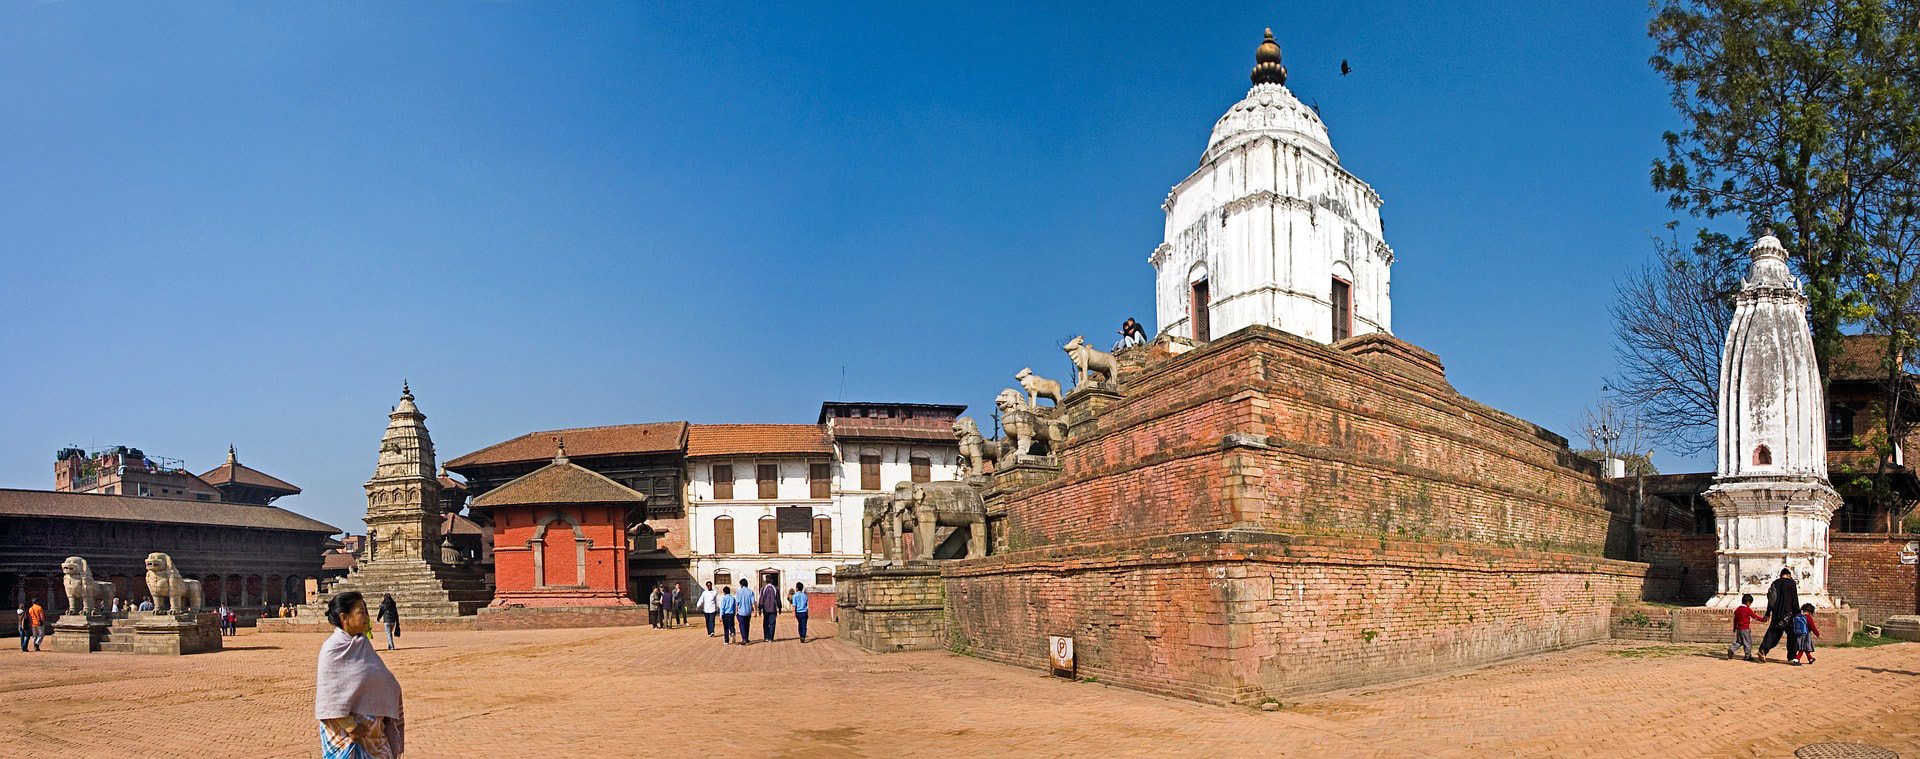 Fasi Dega Temple in Bhaktapur (heavily damaged by the 2015 earthquake)